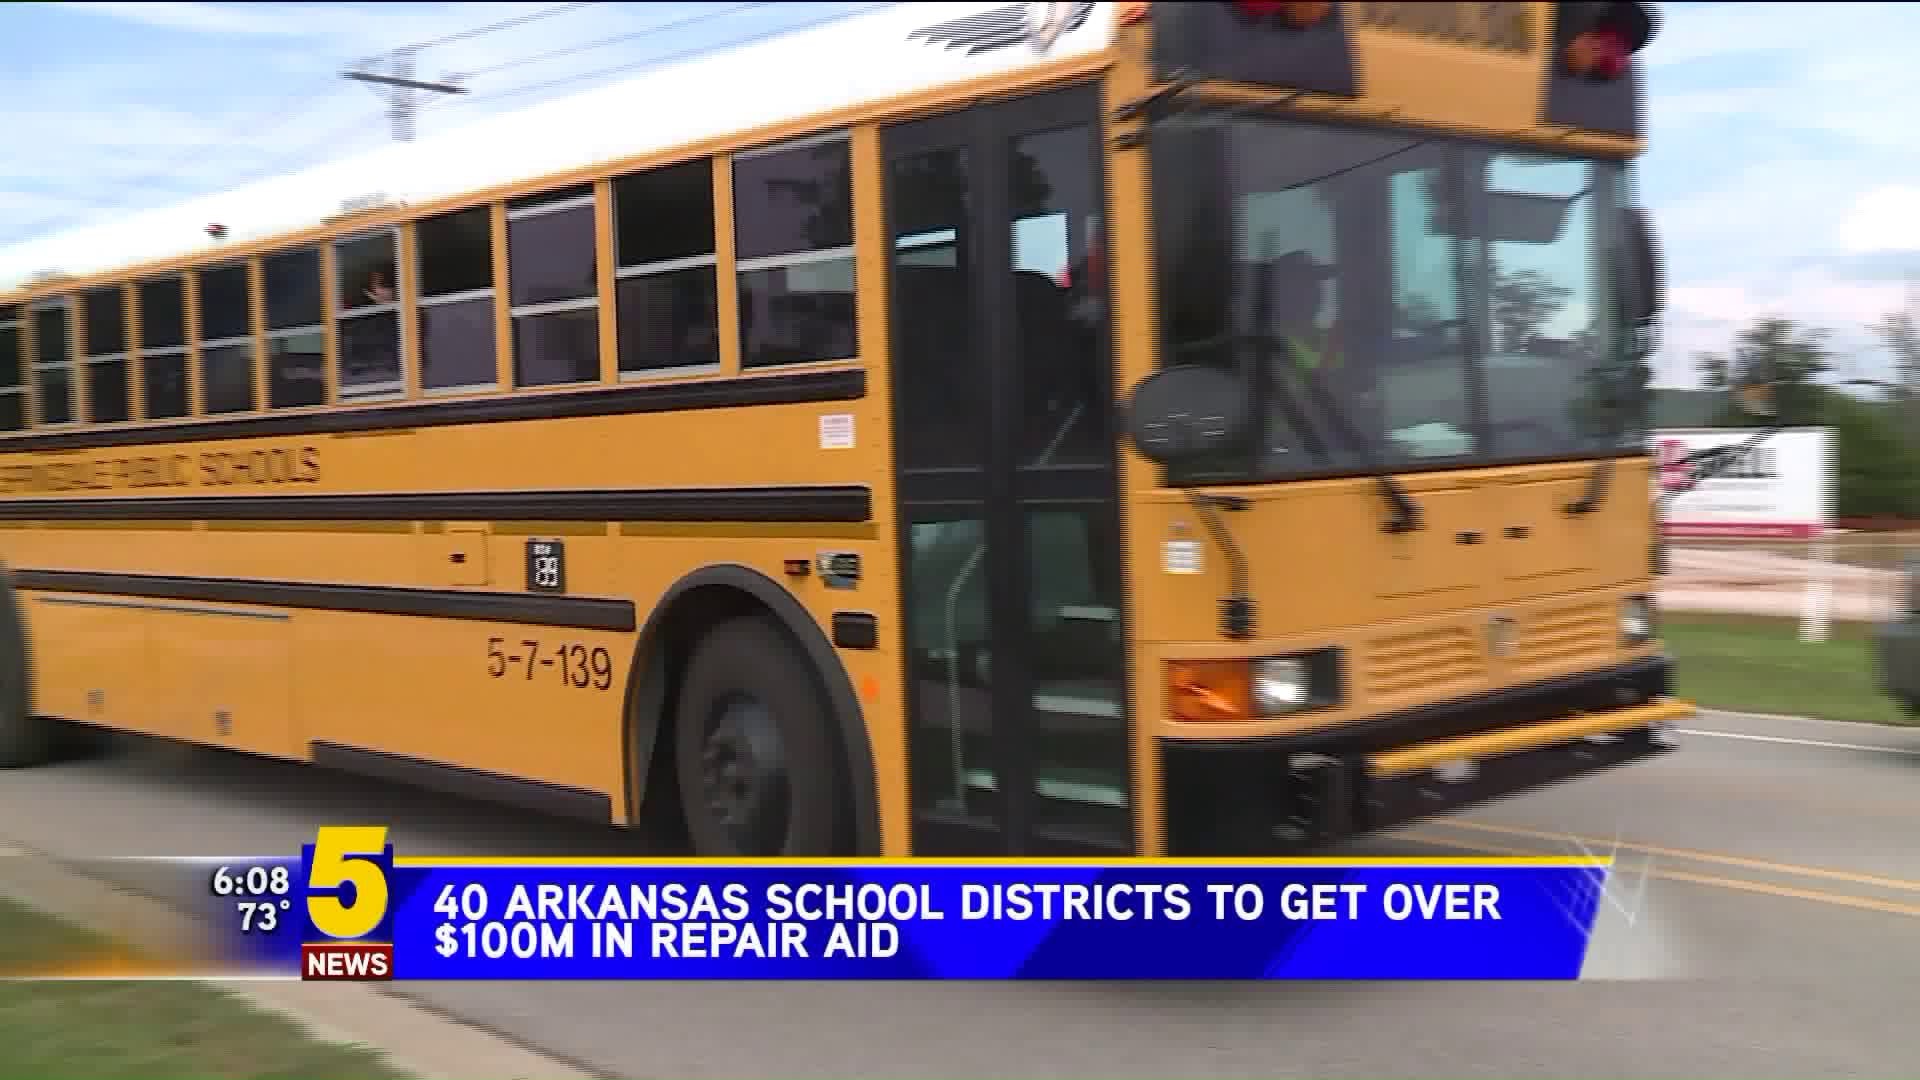 40 Arkansas School Districts Get $100M in Repair Aid